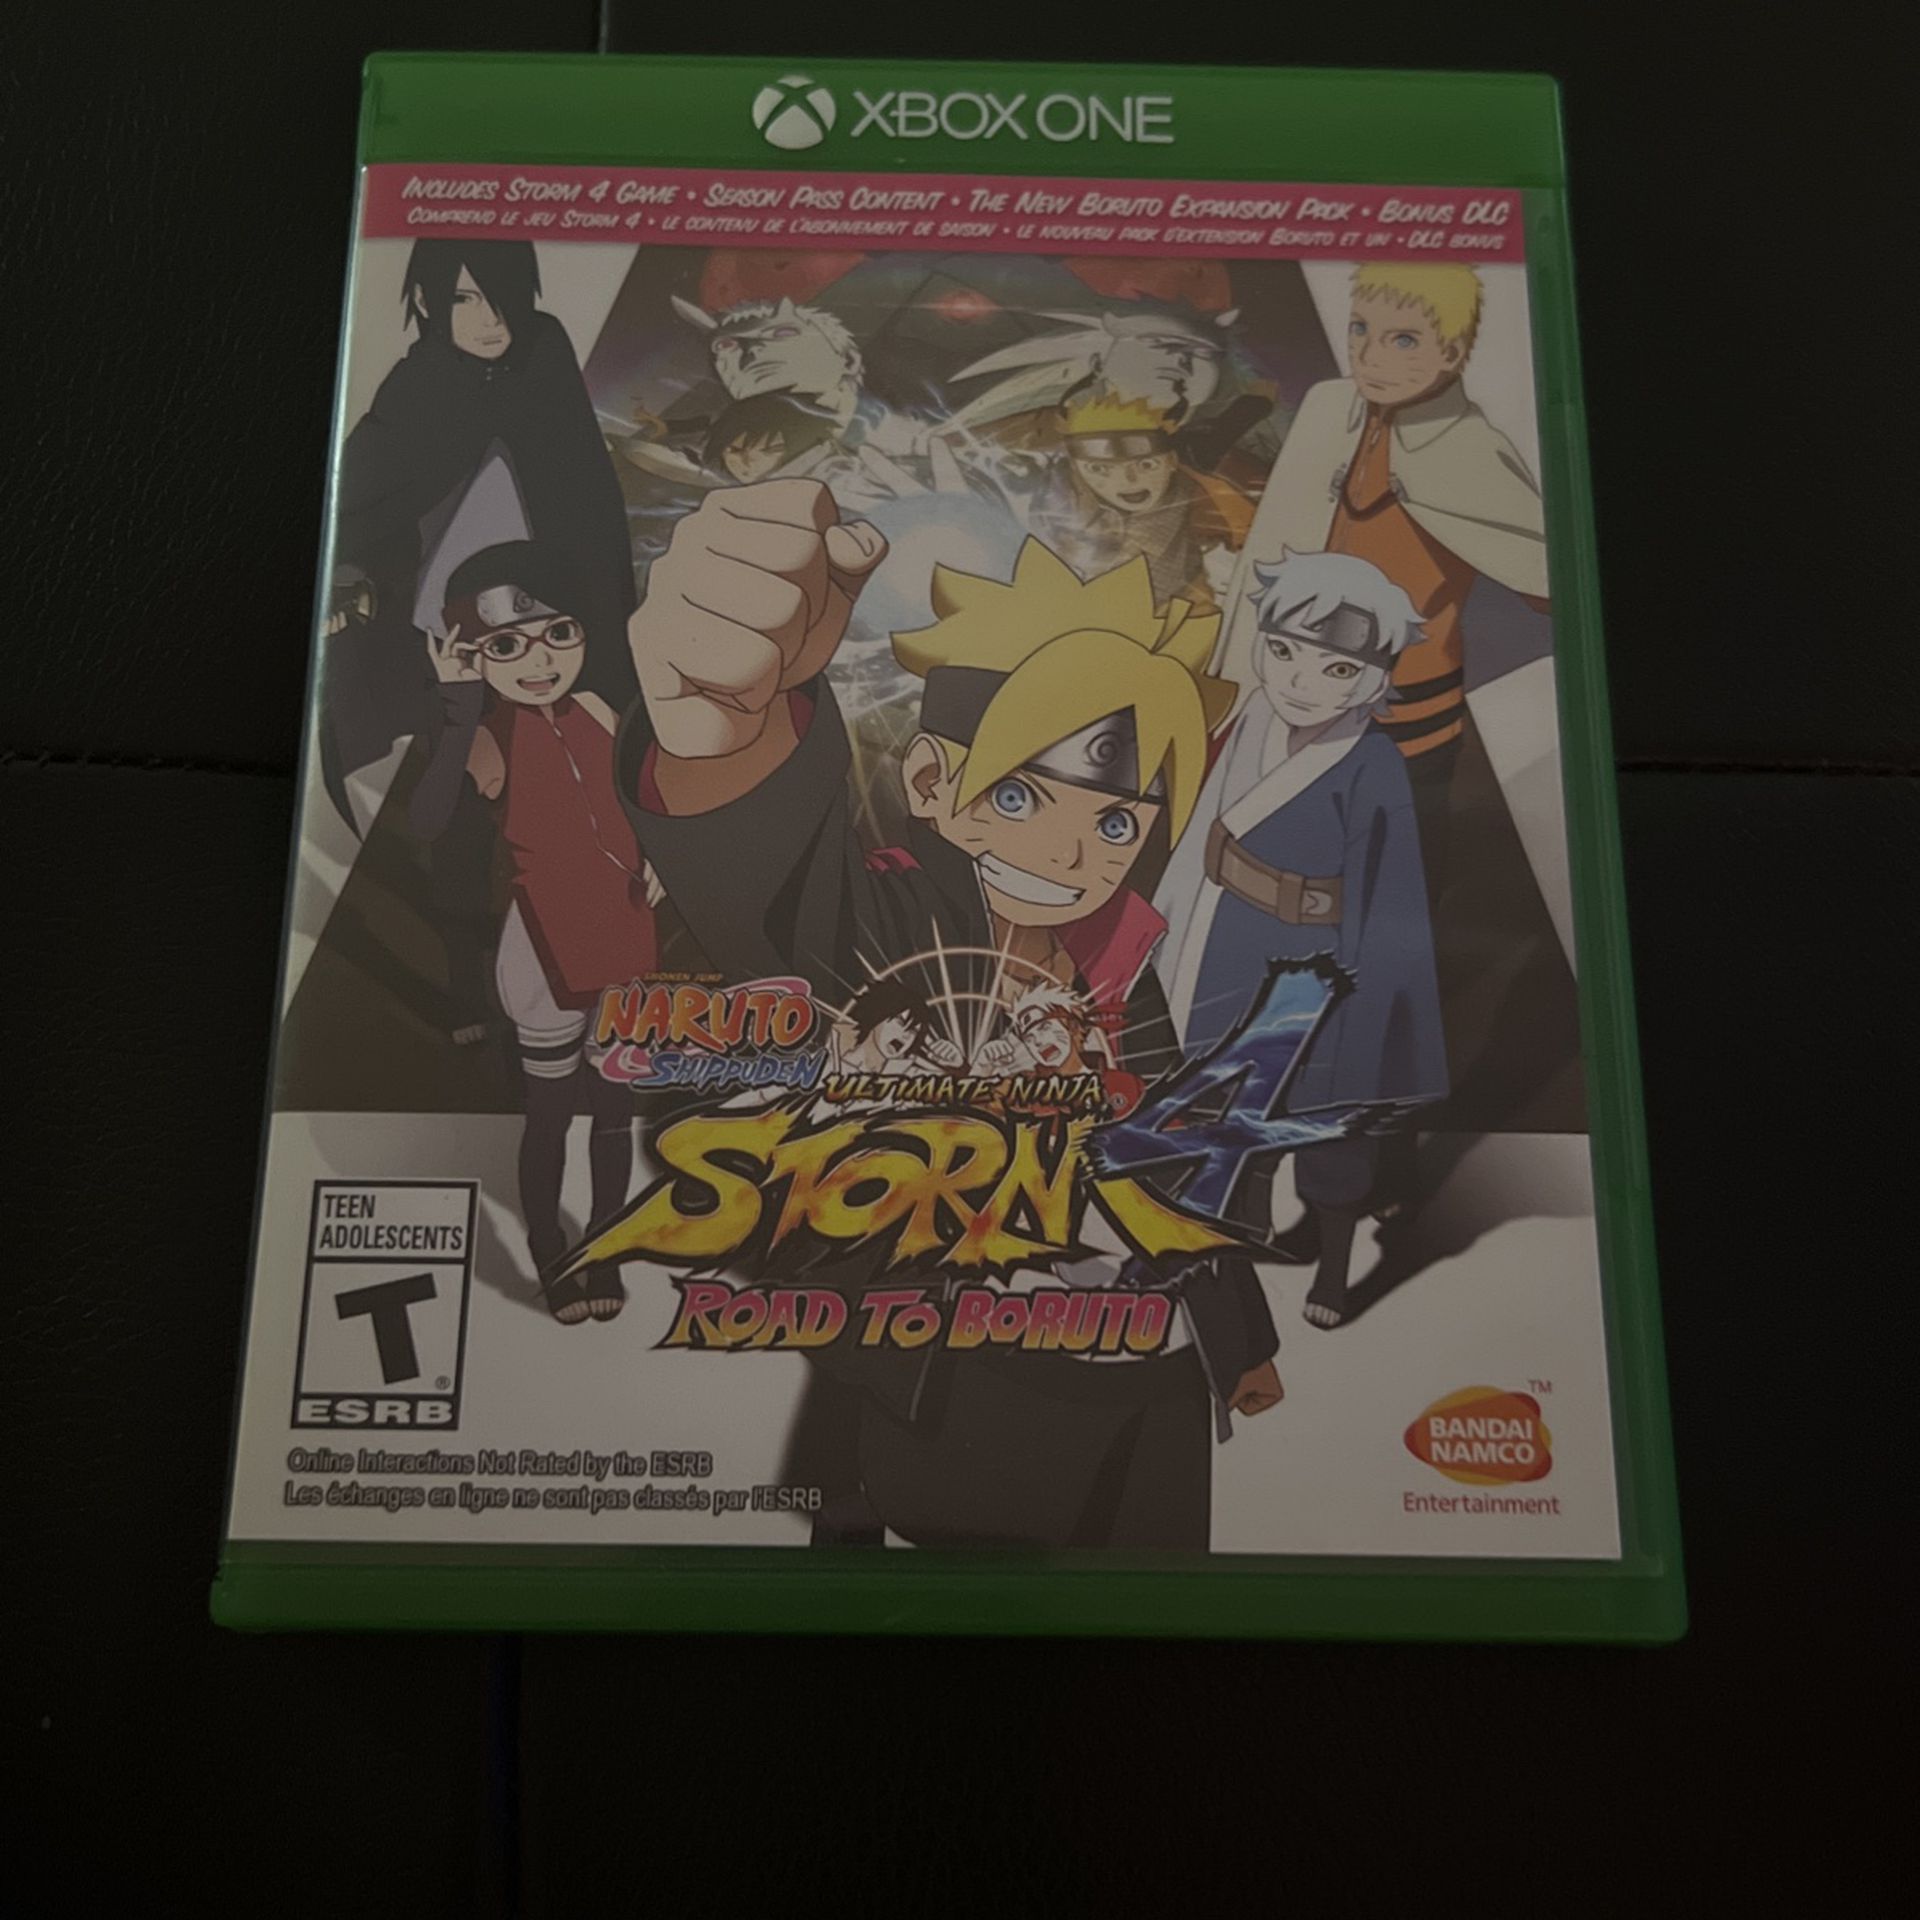 Naruto Shippuden: Ultimate Ninja Storm 4 Road to Boruto - Xbox One